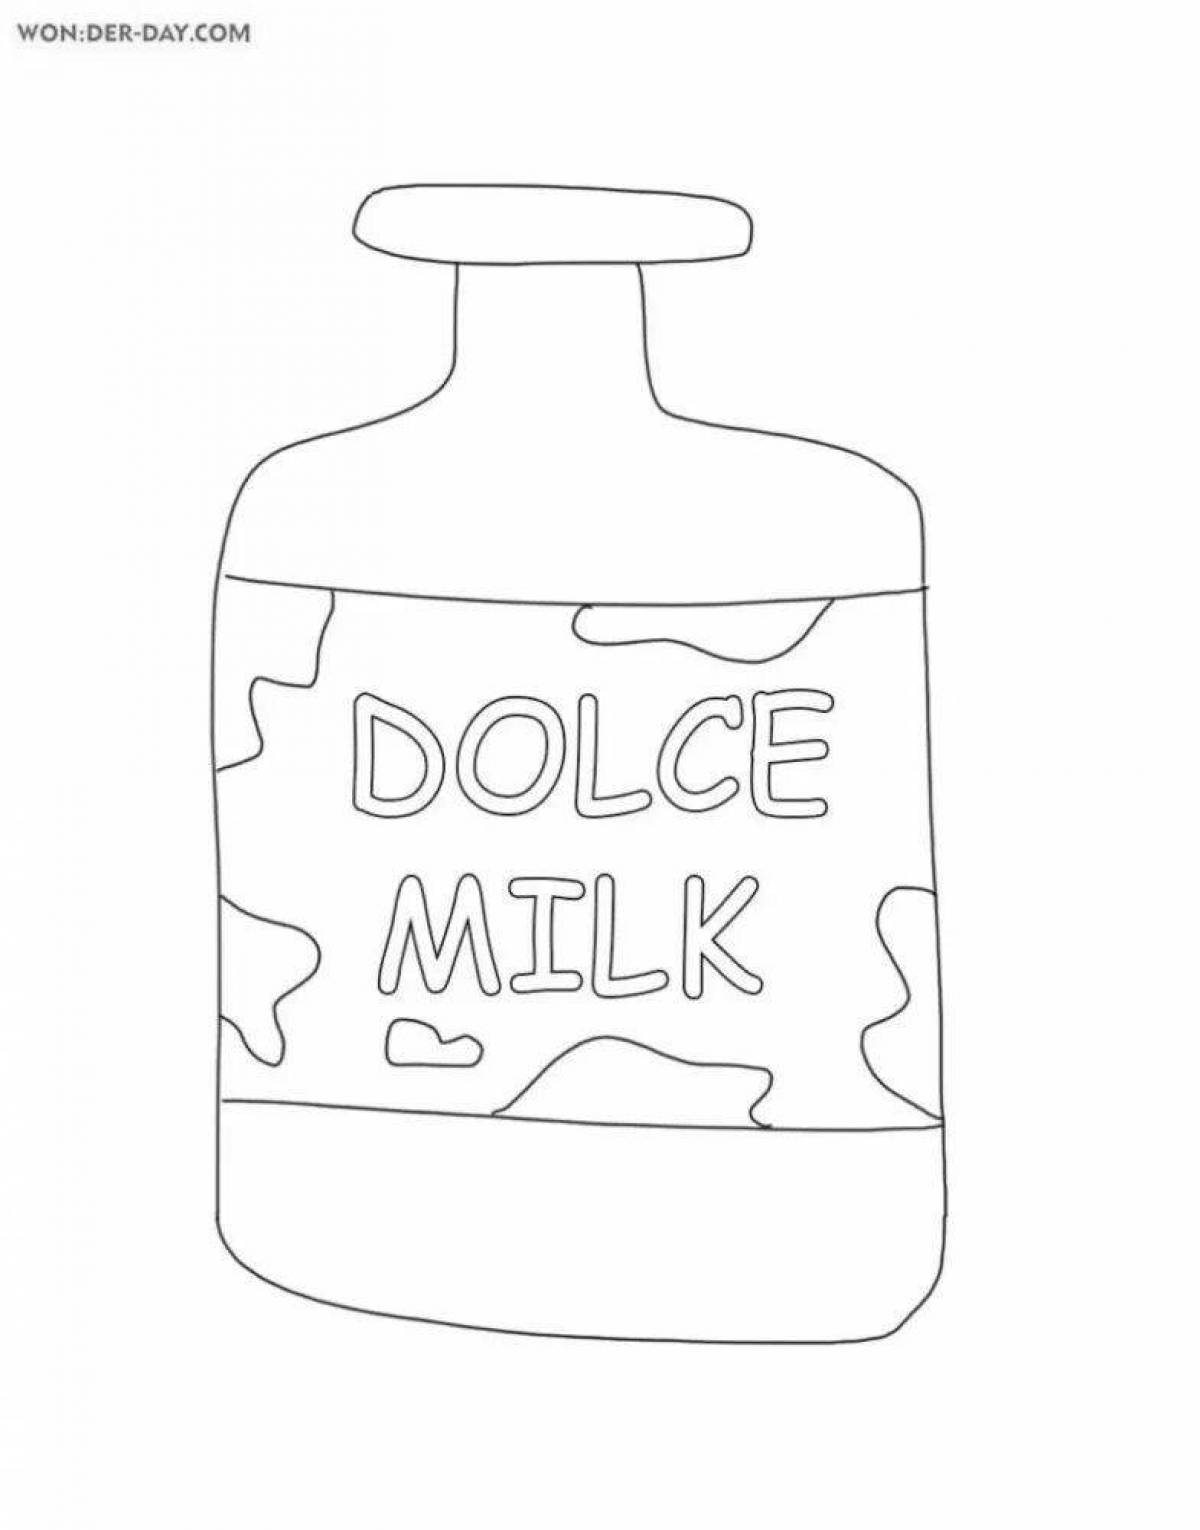 Dolce milk cream fun coloring page